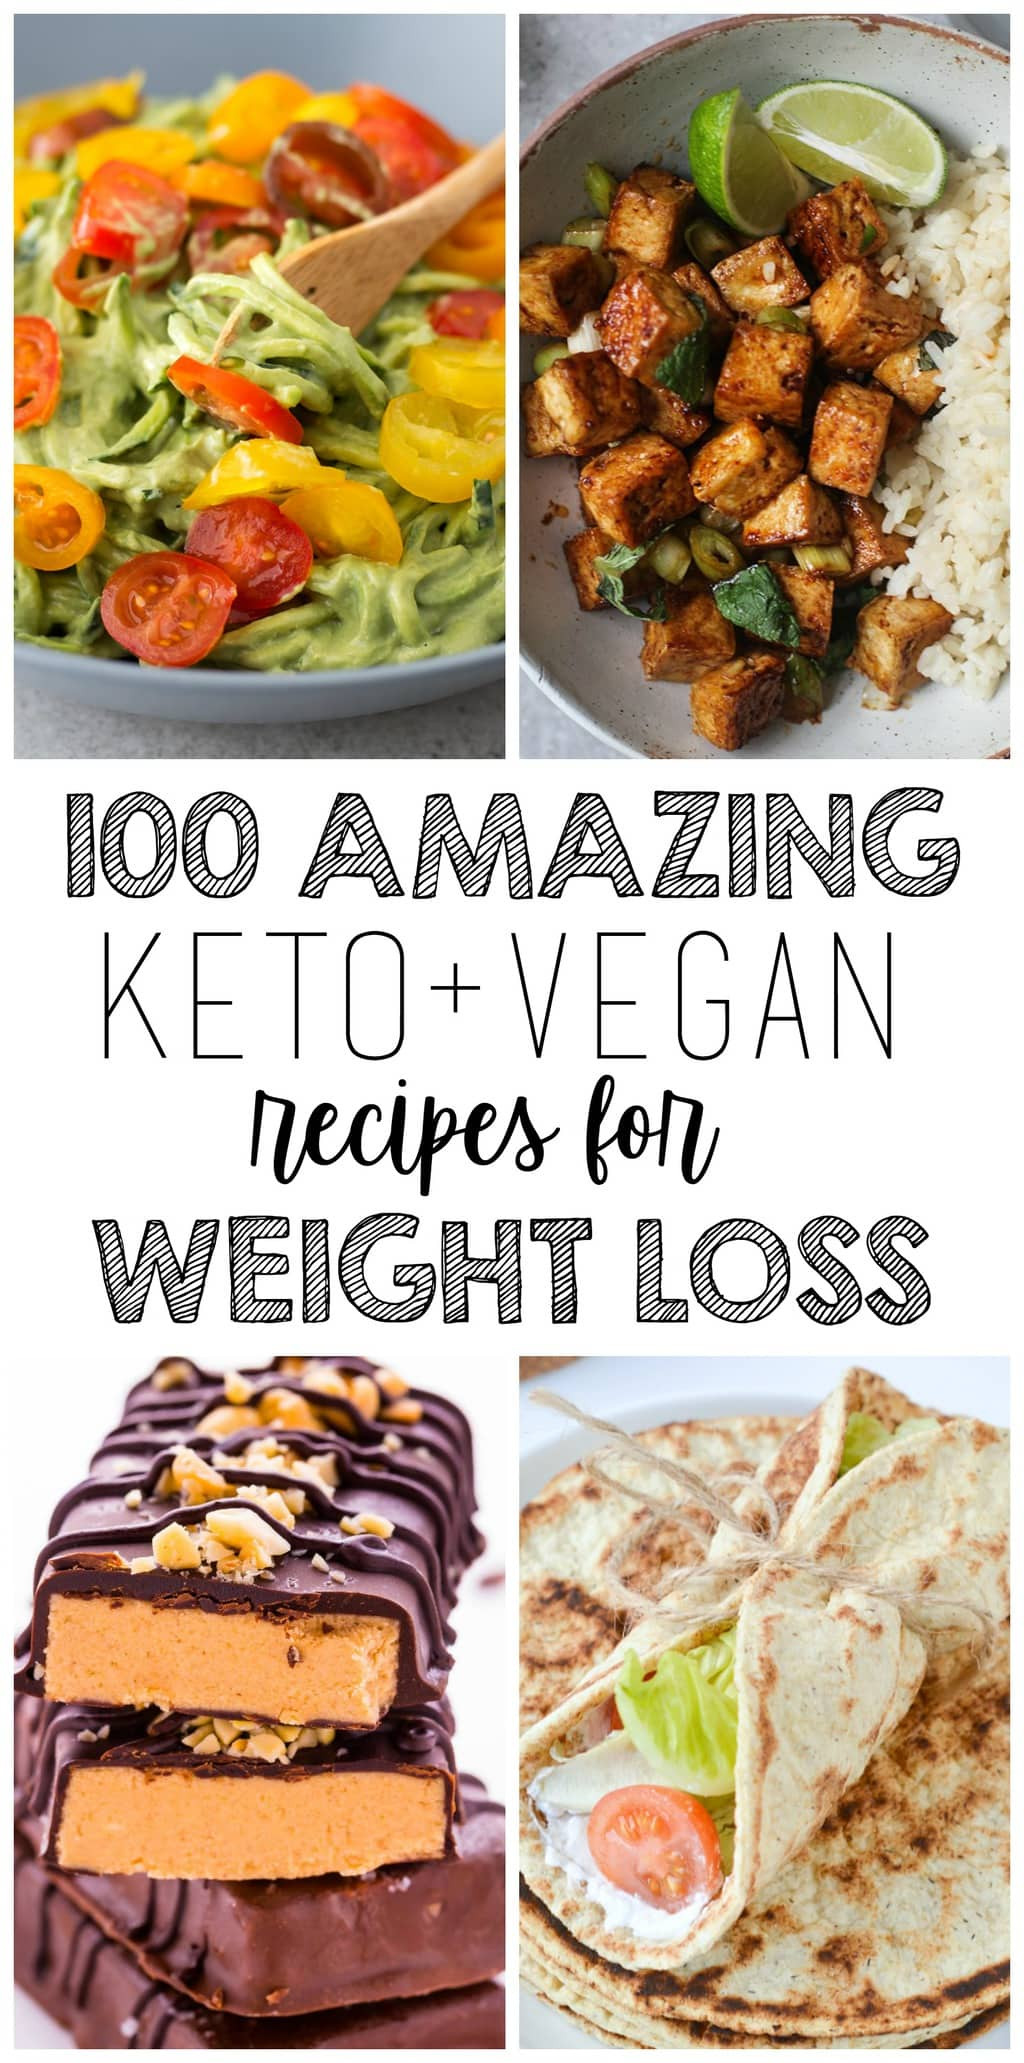 Vegan Keto Recipes Ketogenic Diet
 100 AMAZING Keto Vegan Recipes For Weight Loss